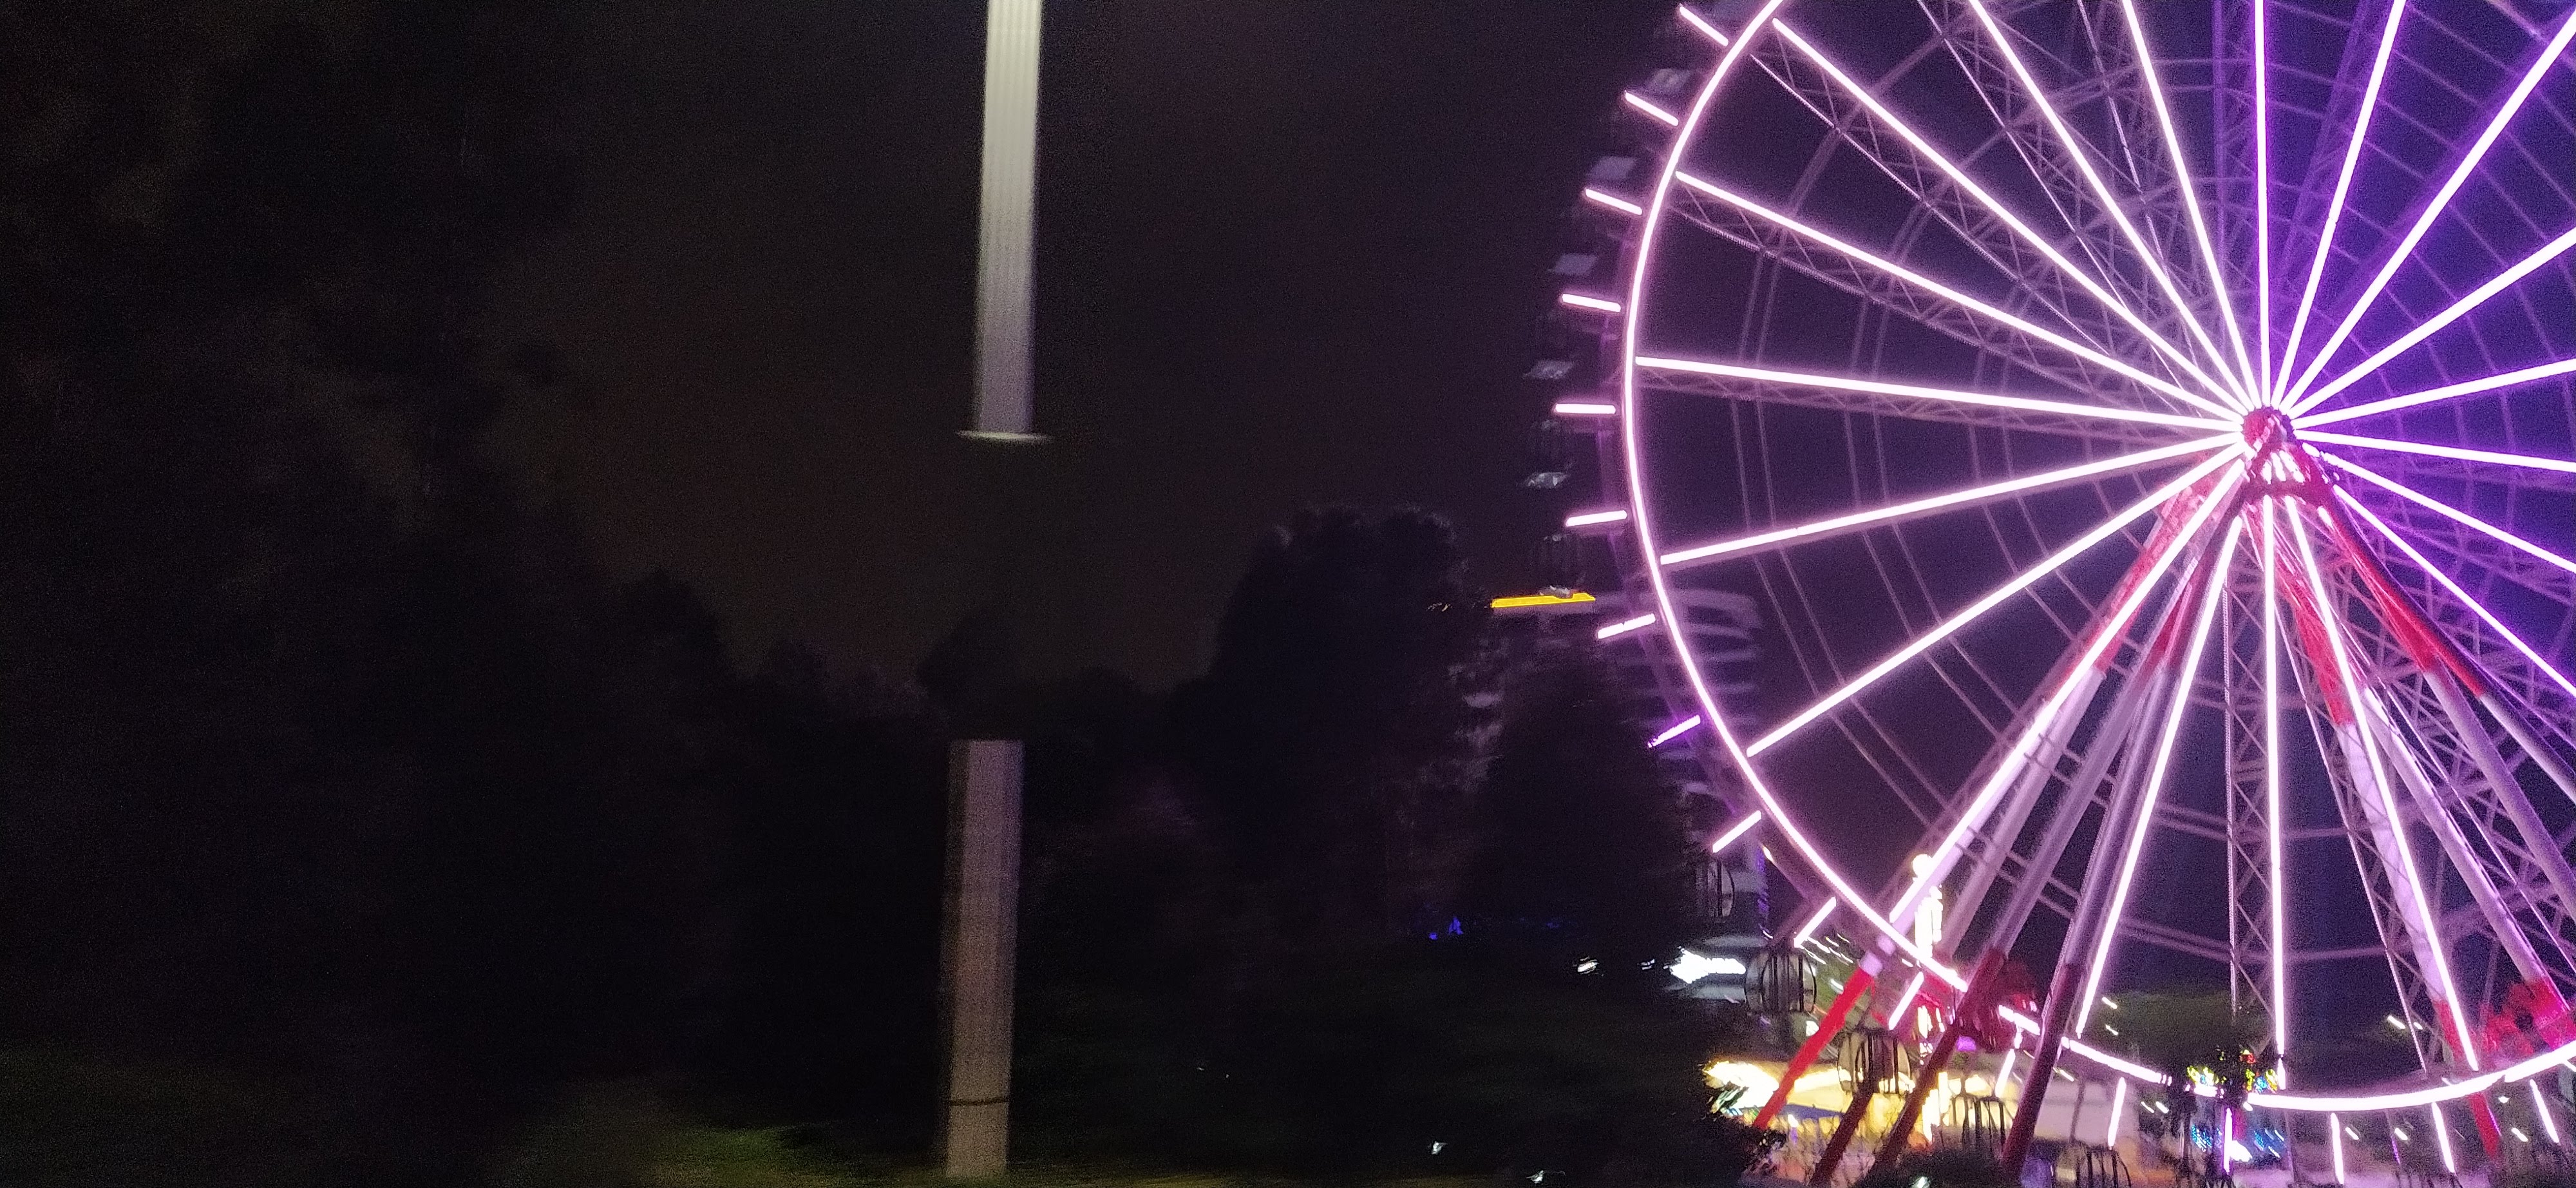 Two Rivers Mall Ferris Wheel - Night View6